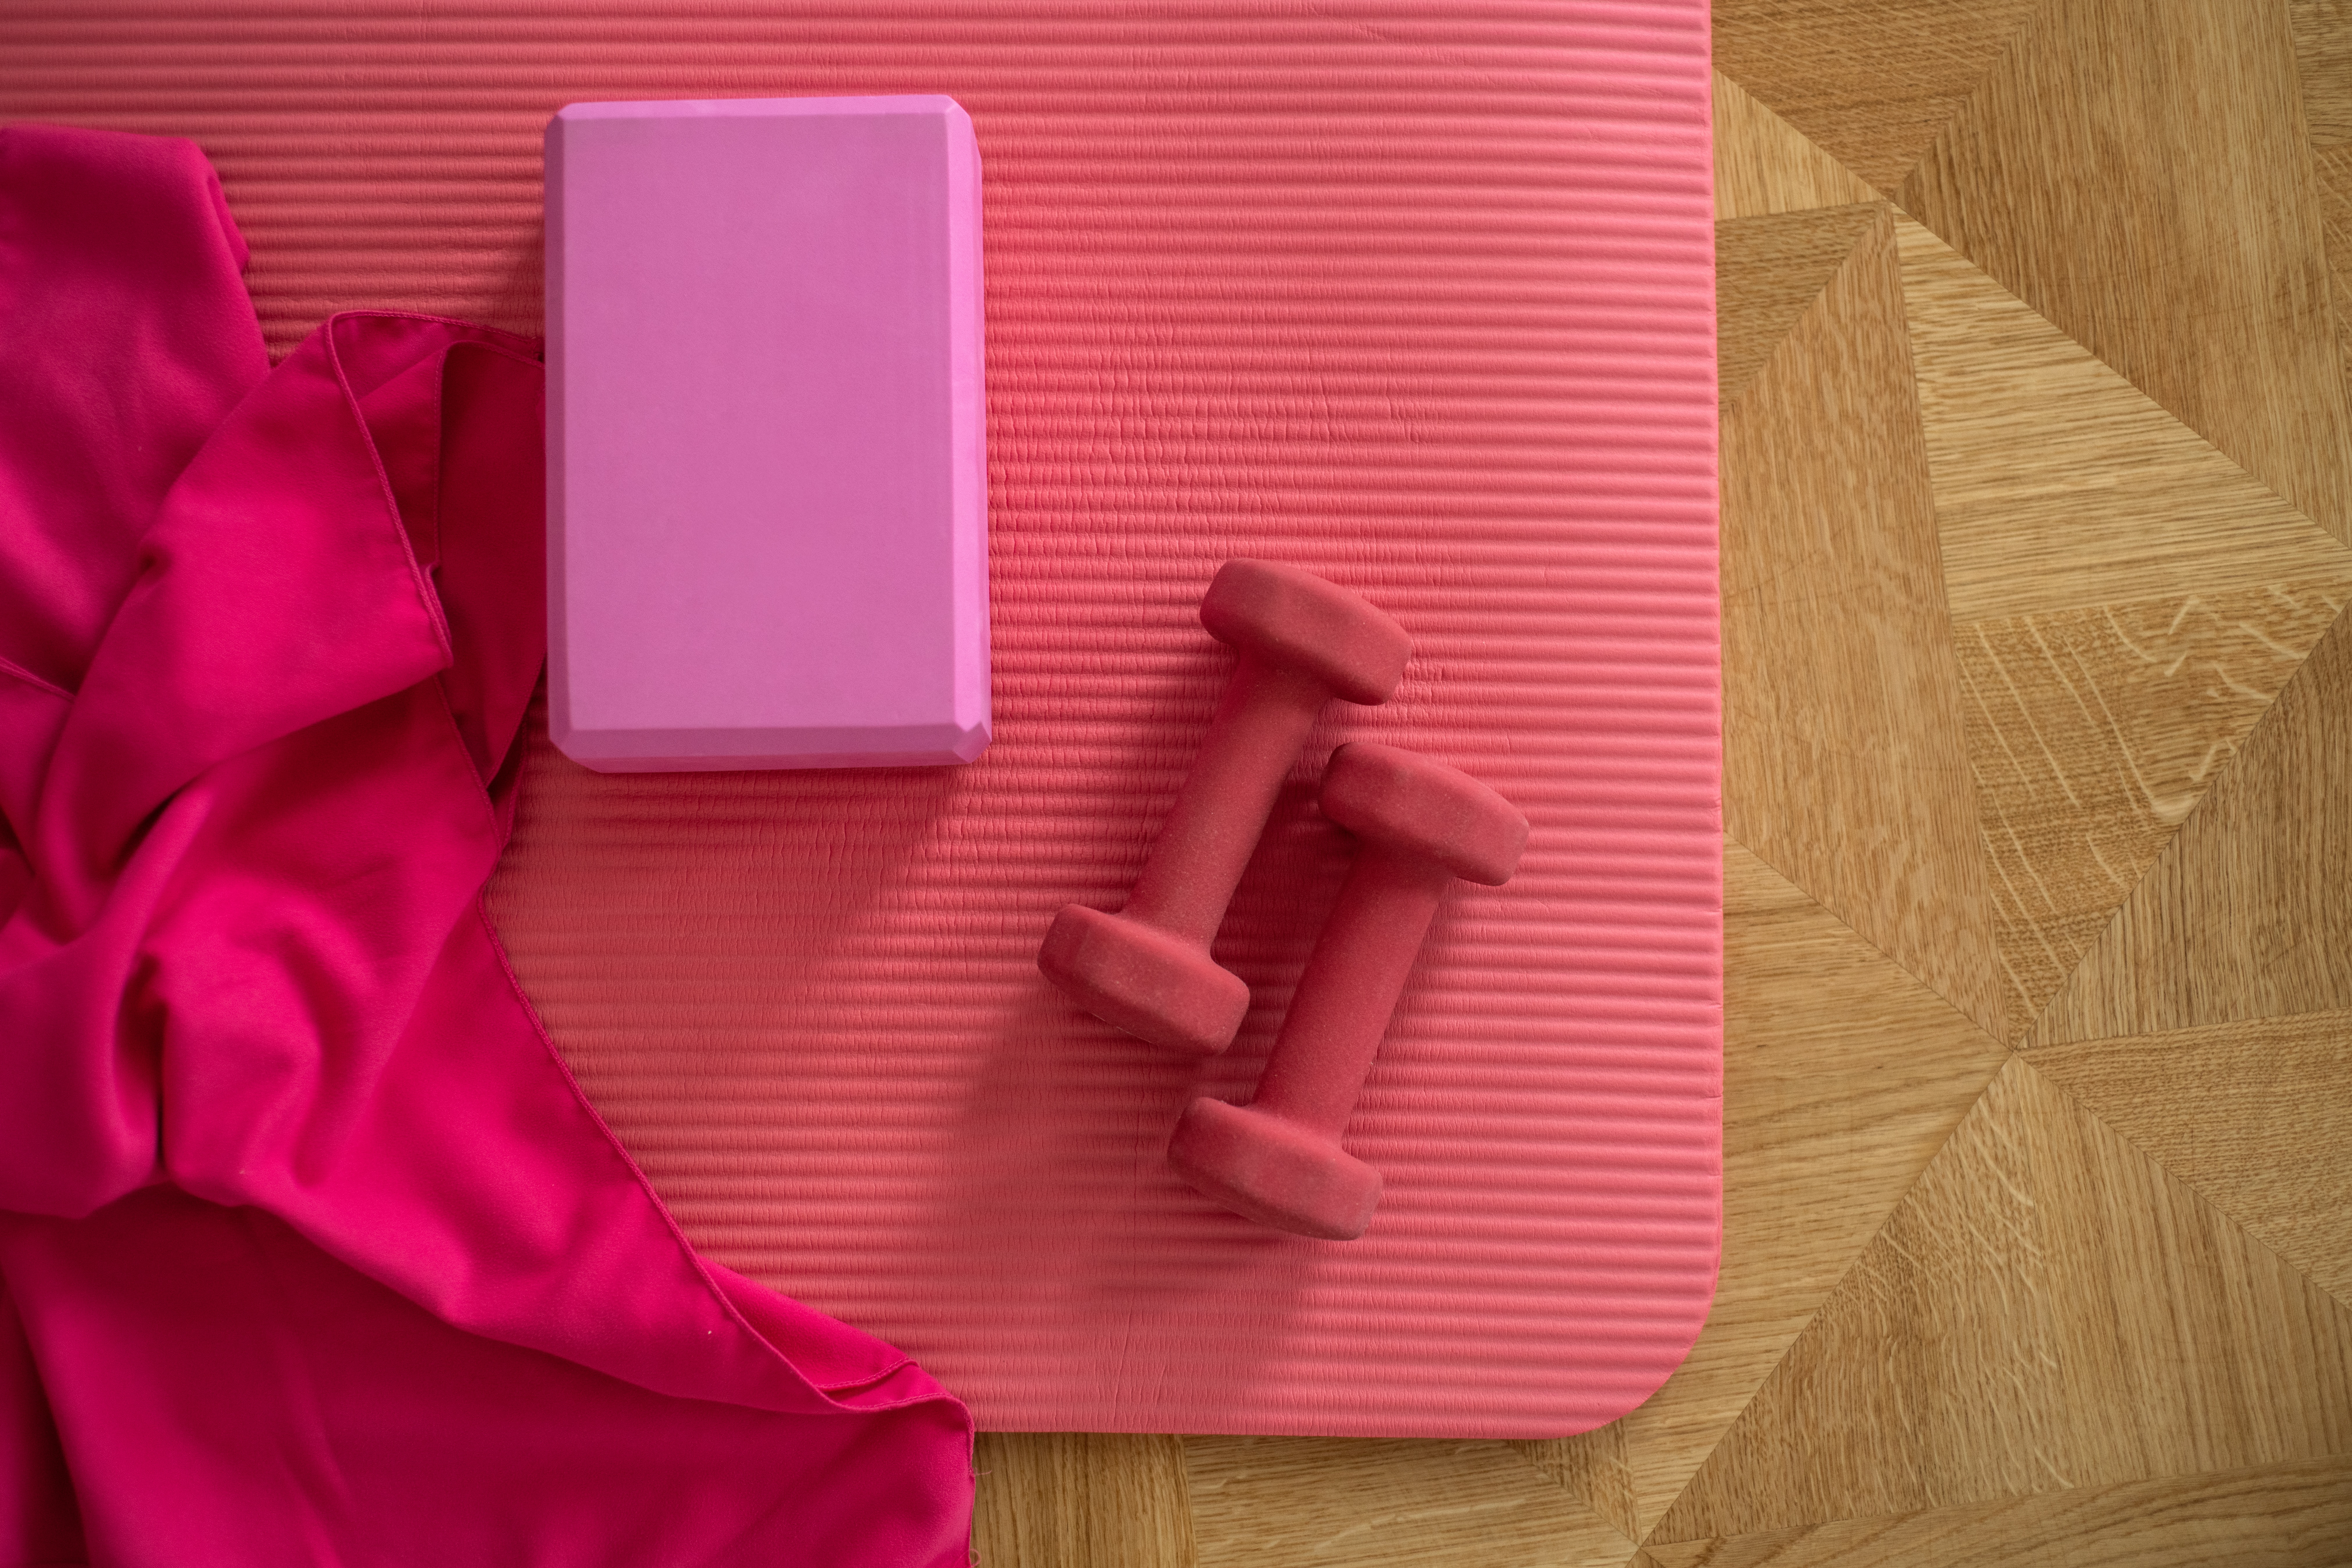 pink sports equipment including a yoga mat, a pair of dumbbells, a yoga block, and a towel